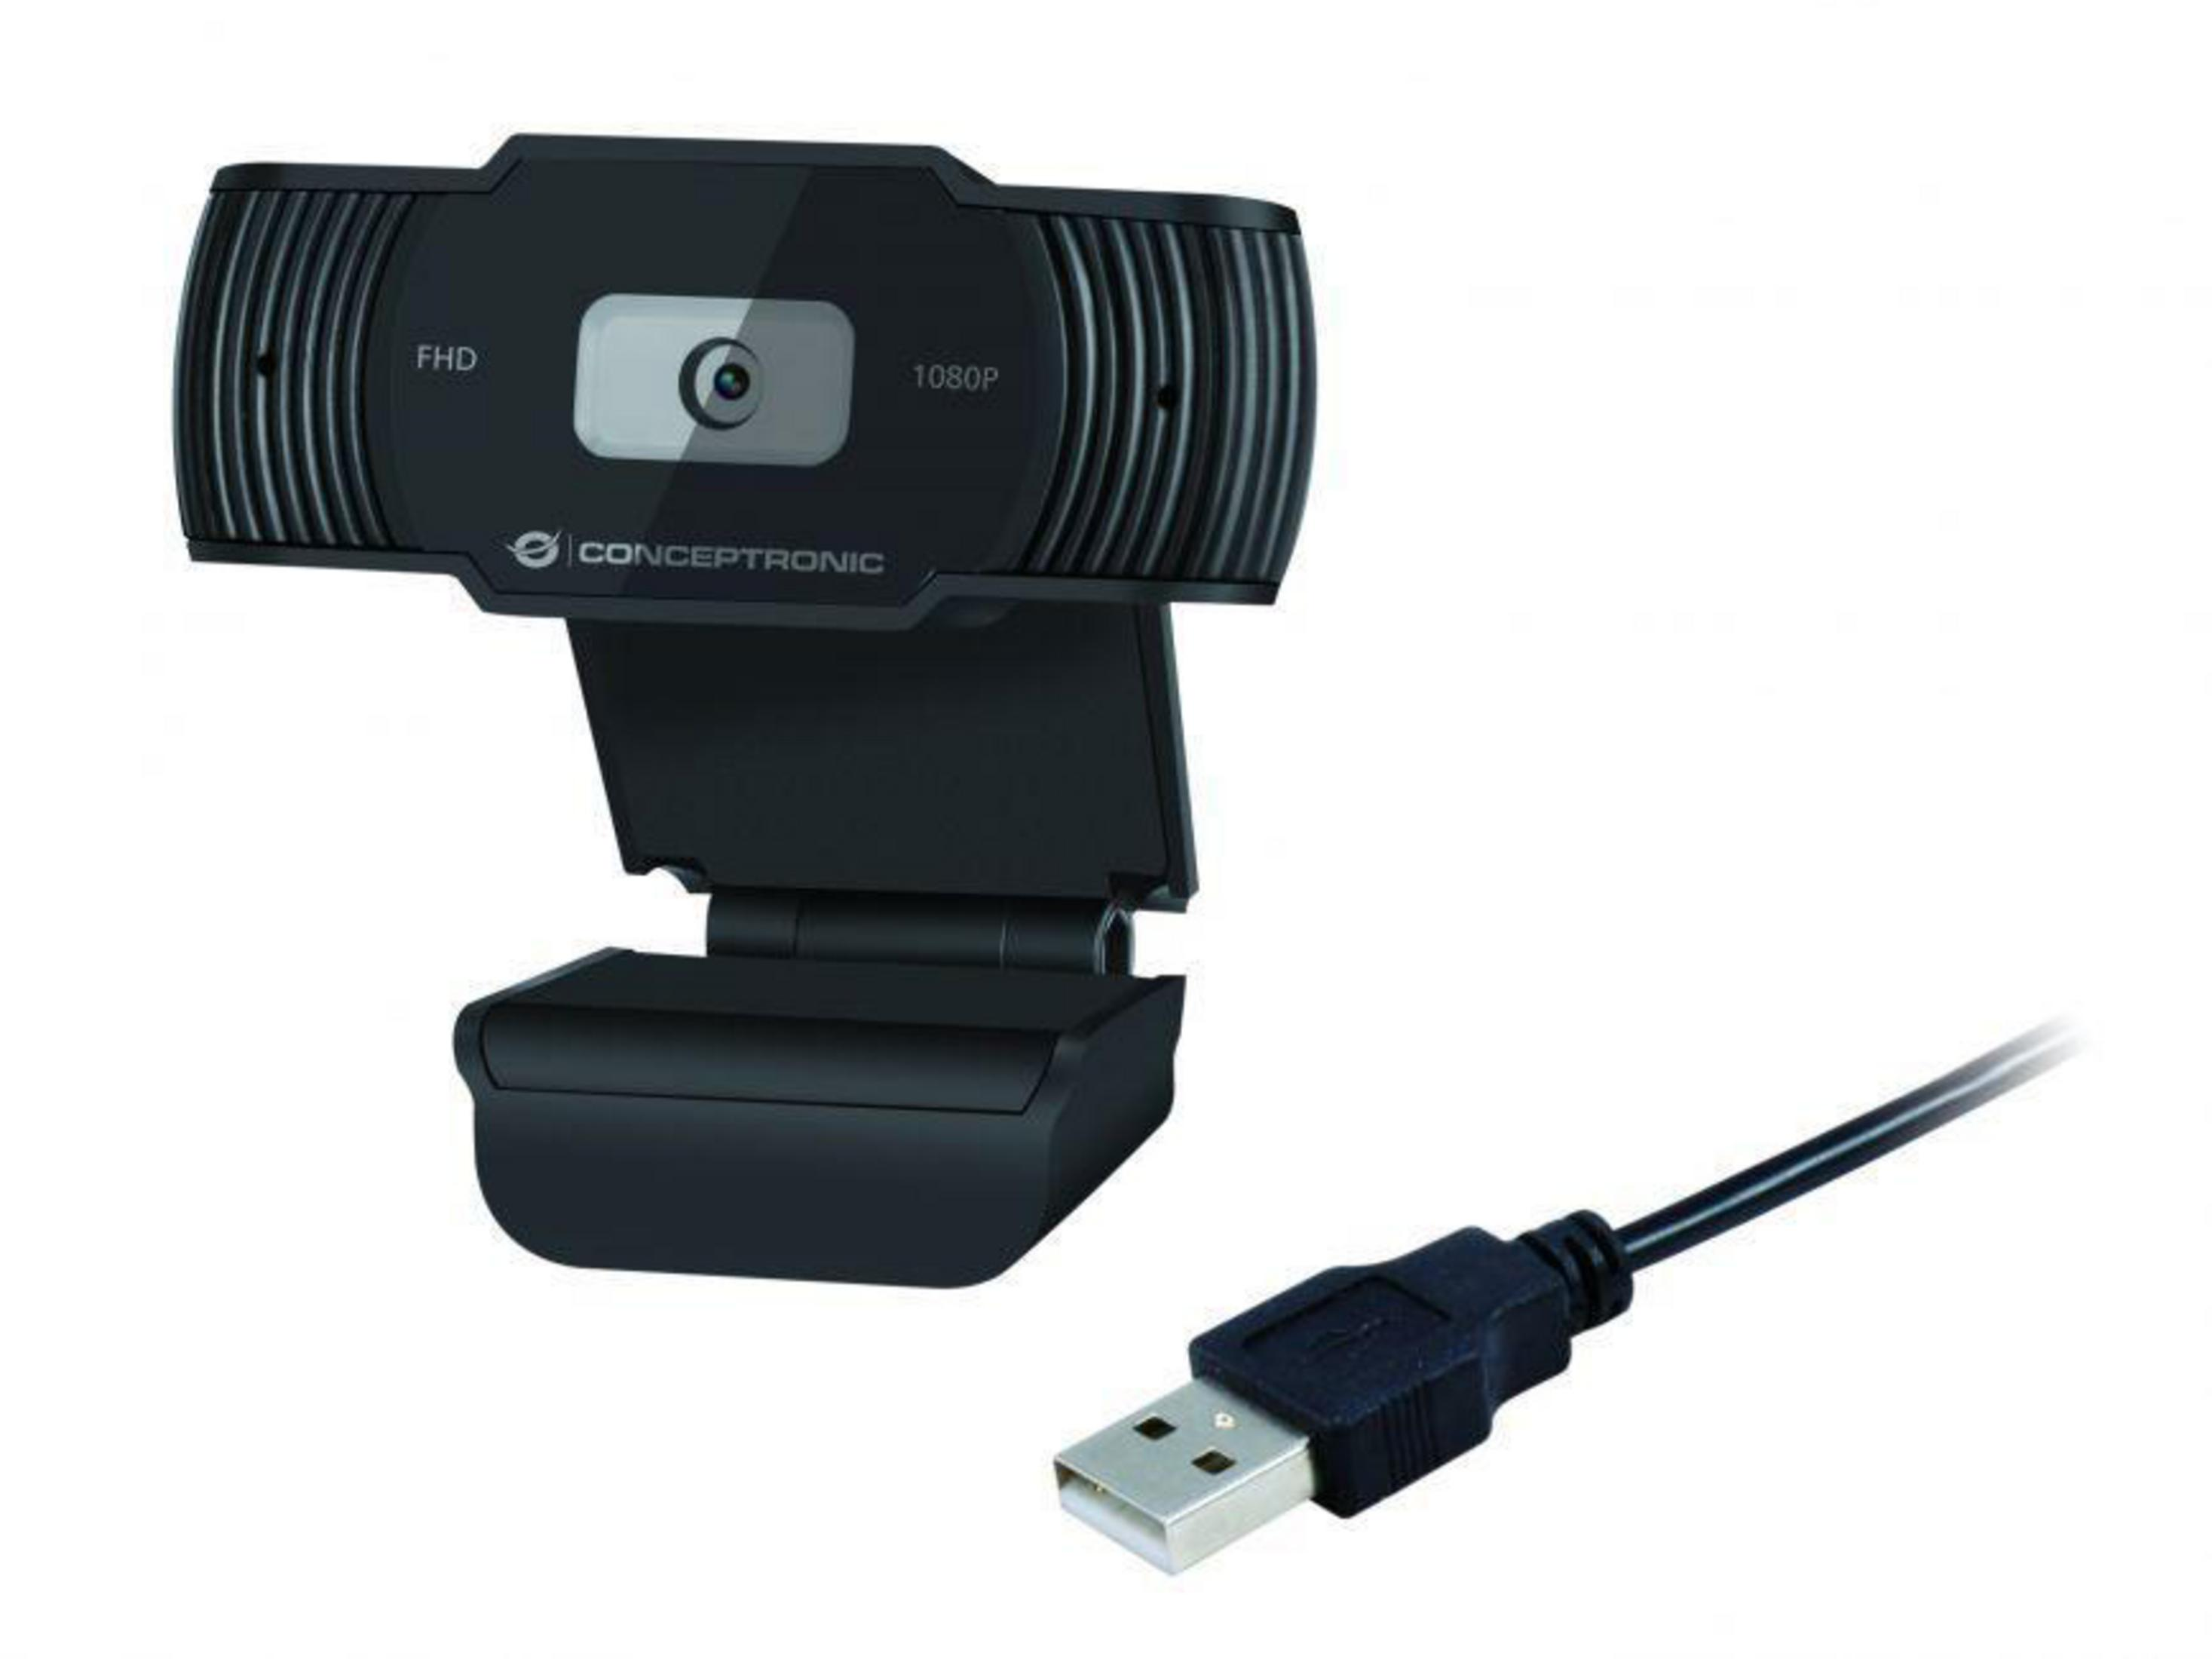 CONCEPTRONIC AMDIS04B 1080P FULL HD Webcam